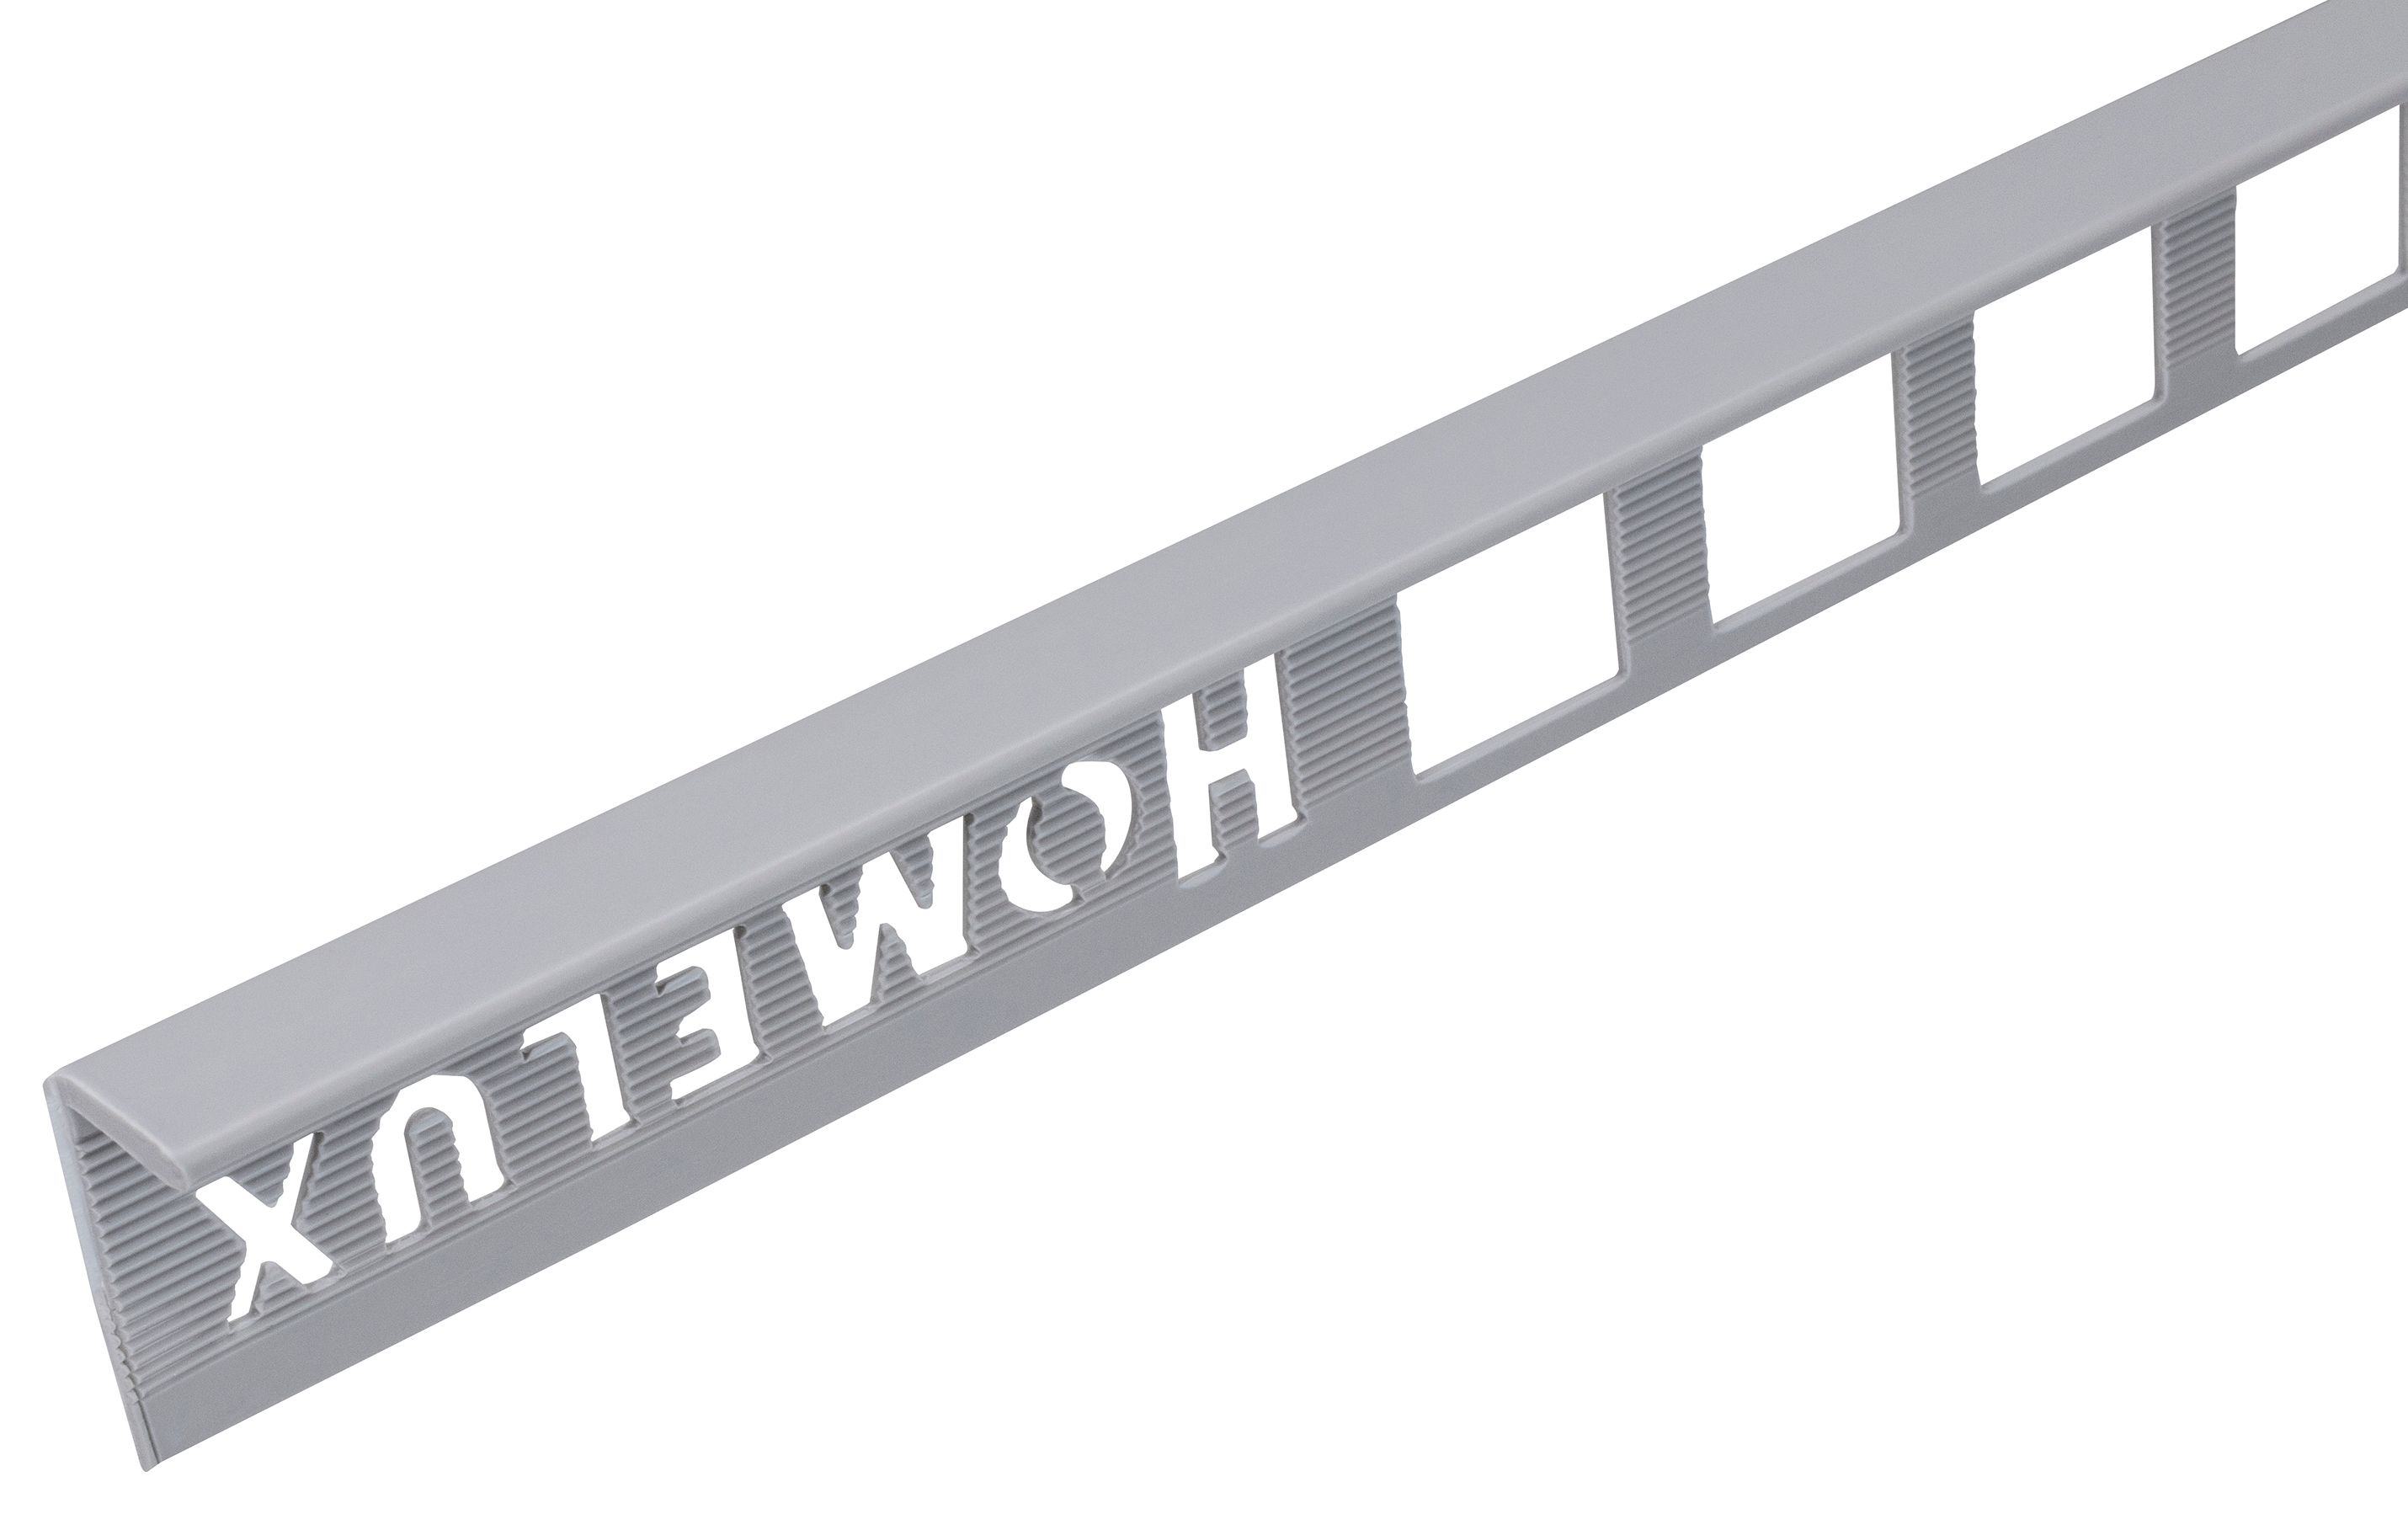 Homelux 8mm PVC Straight Edge Grey Tile Trim - 2.5m